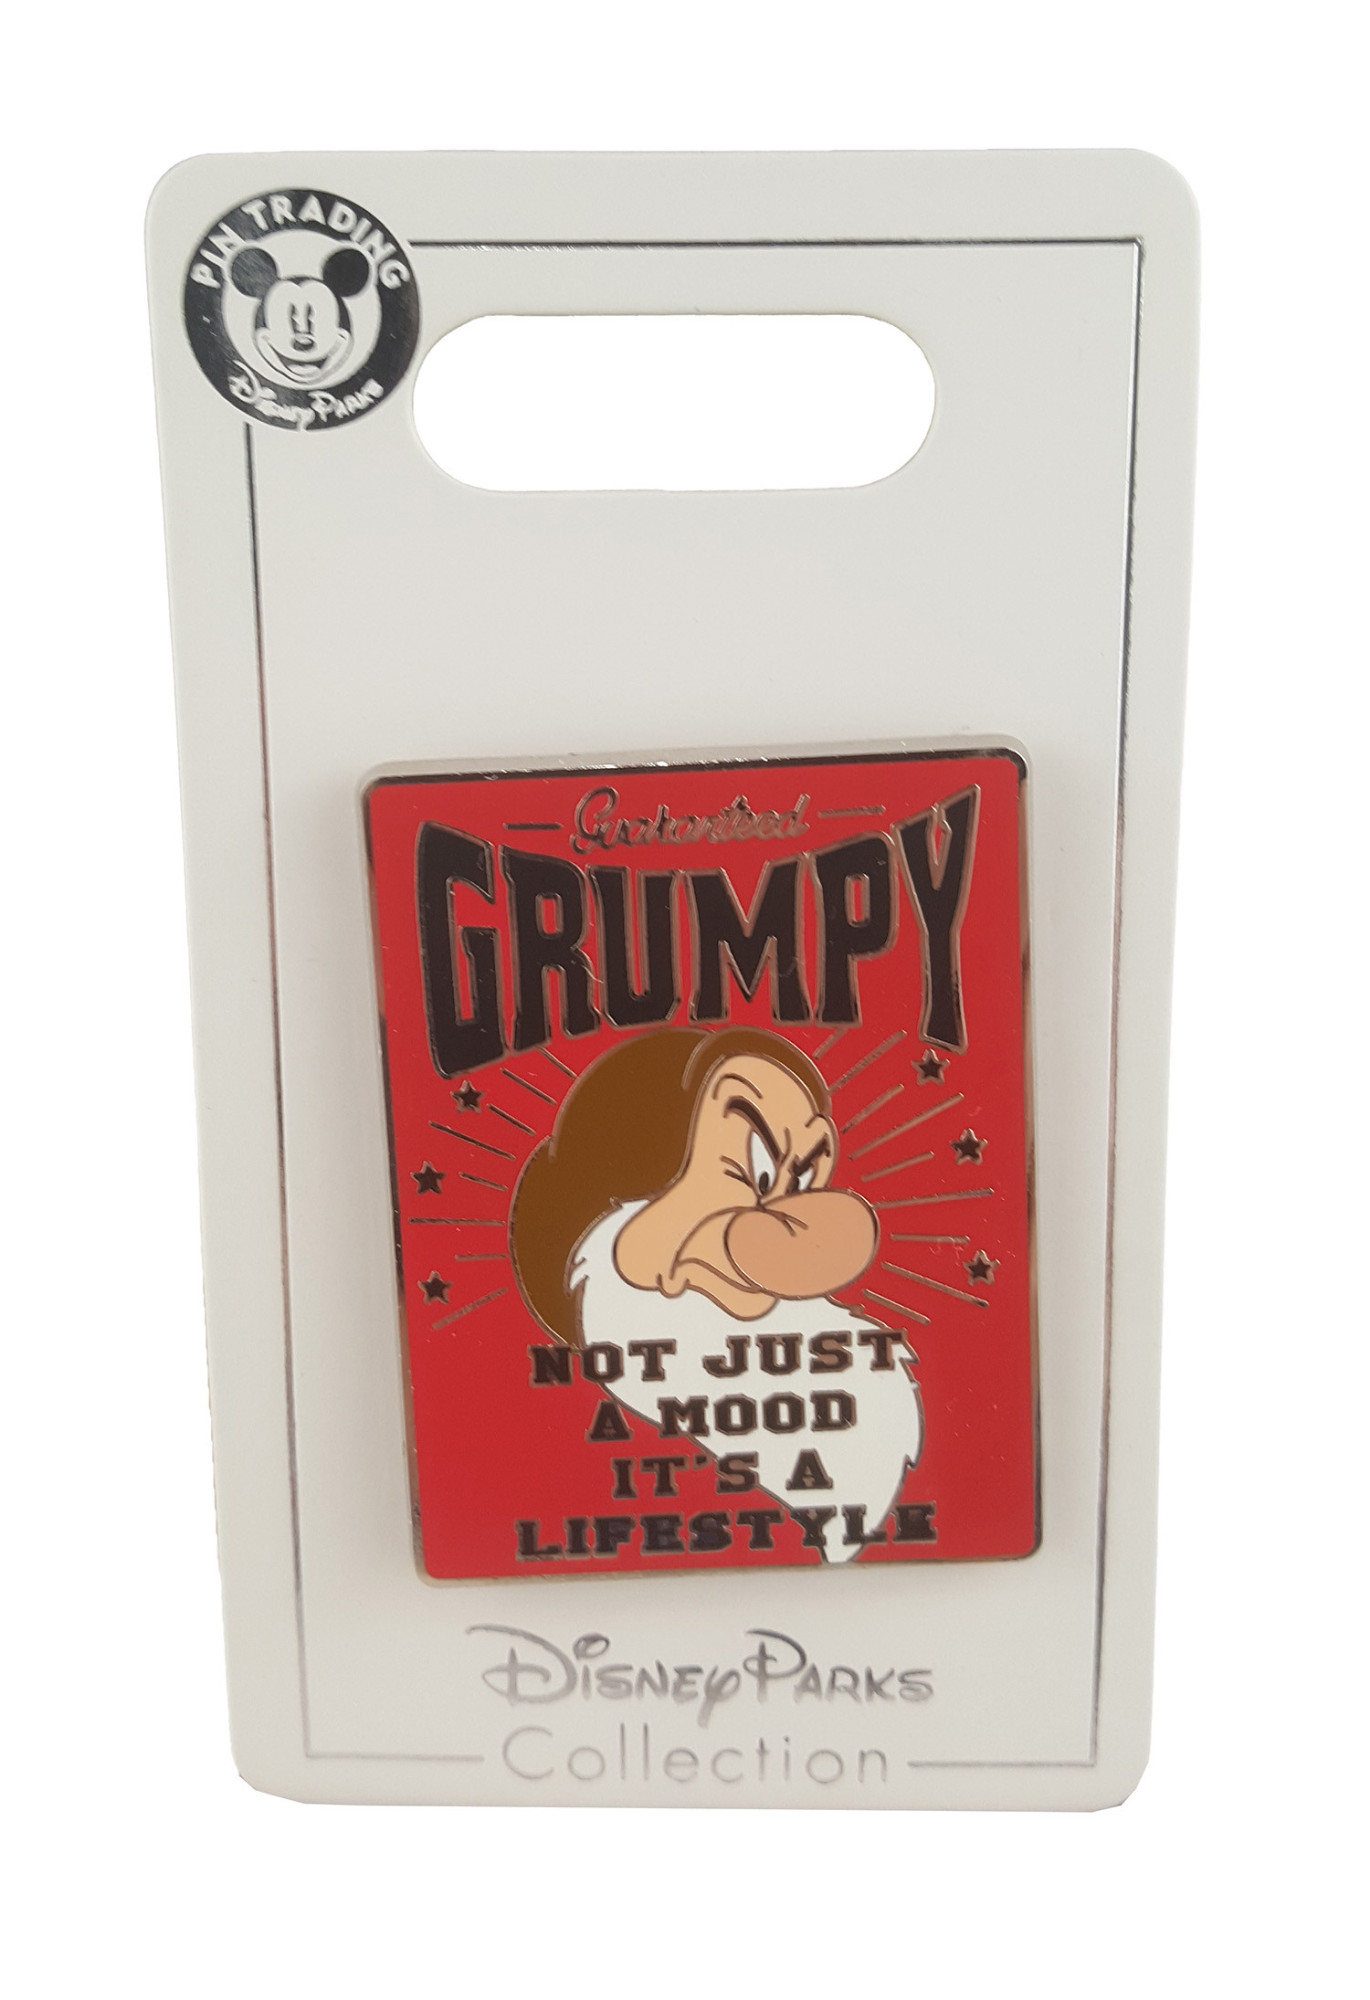 products Disney Pin - Guaranteed Grumpy - It's a Lifestyle